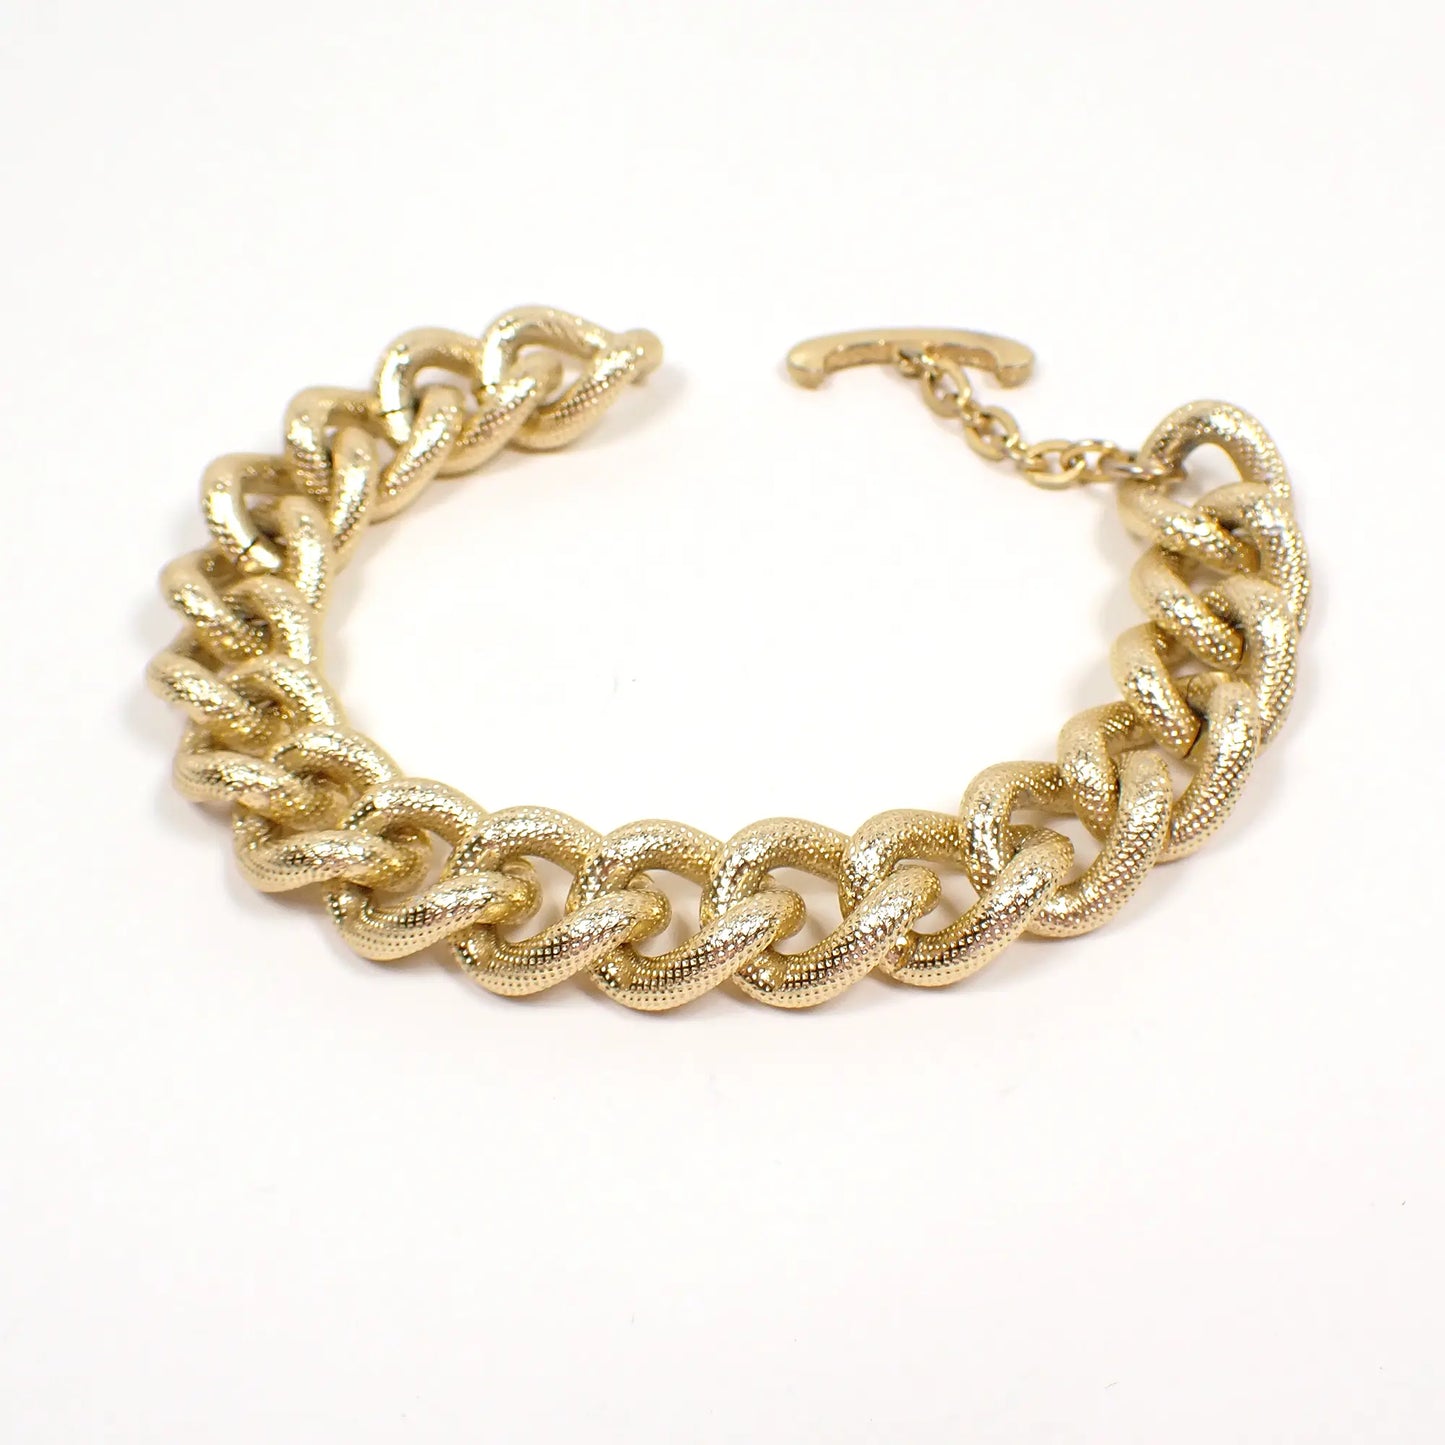 1970's Avon Gold Tone Vintage Textured Curb Chain Bracelet